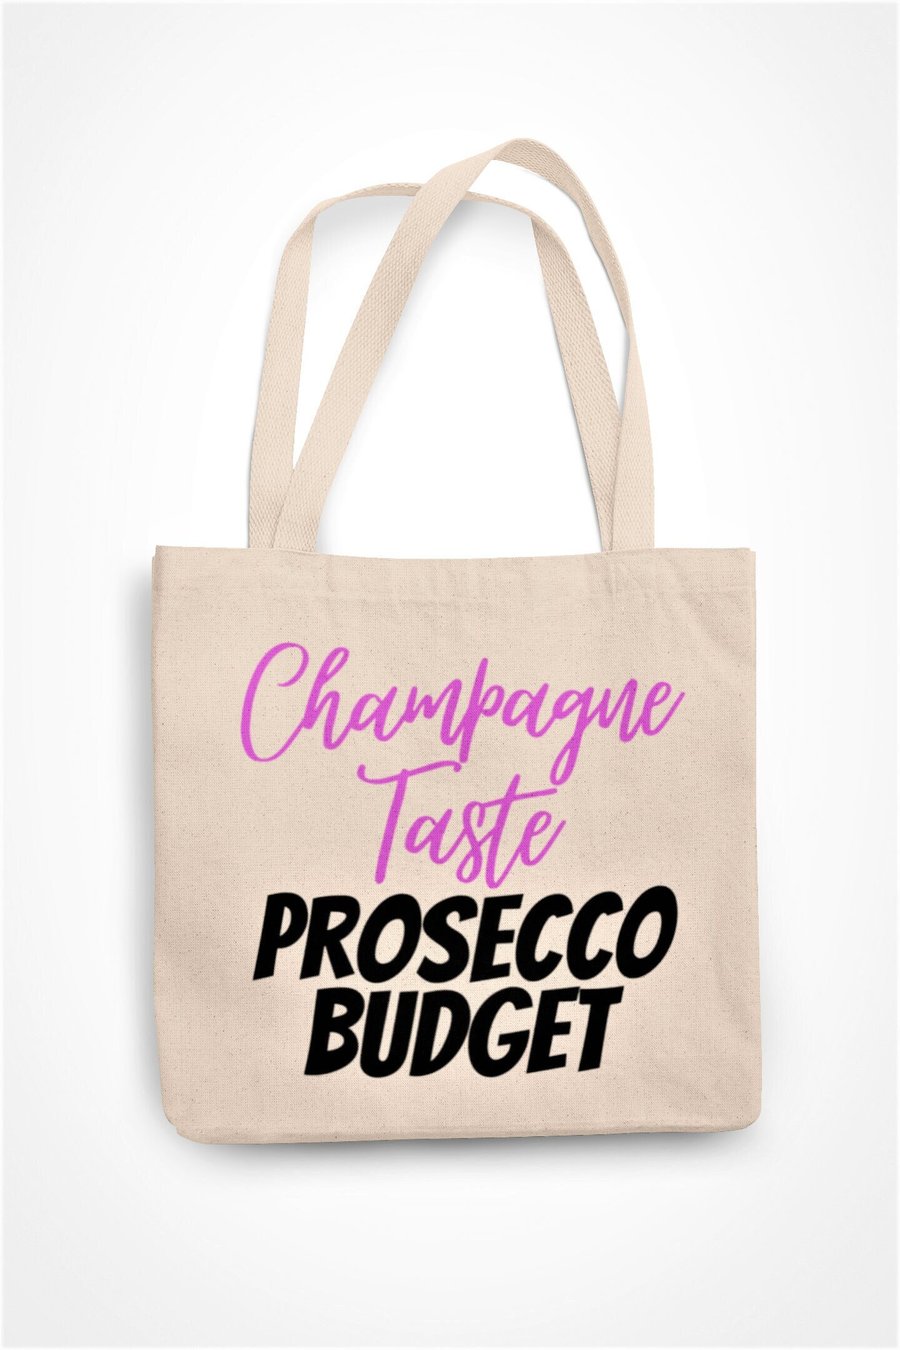 Champagne Taste Prosecco Budget Tote Bag Funny Sassy Bag Birthday Present 